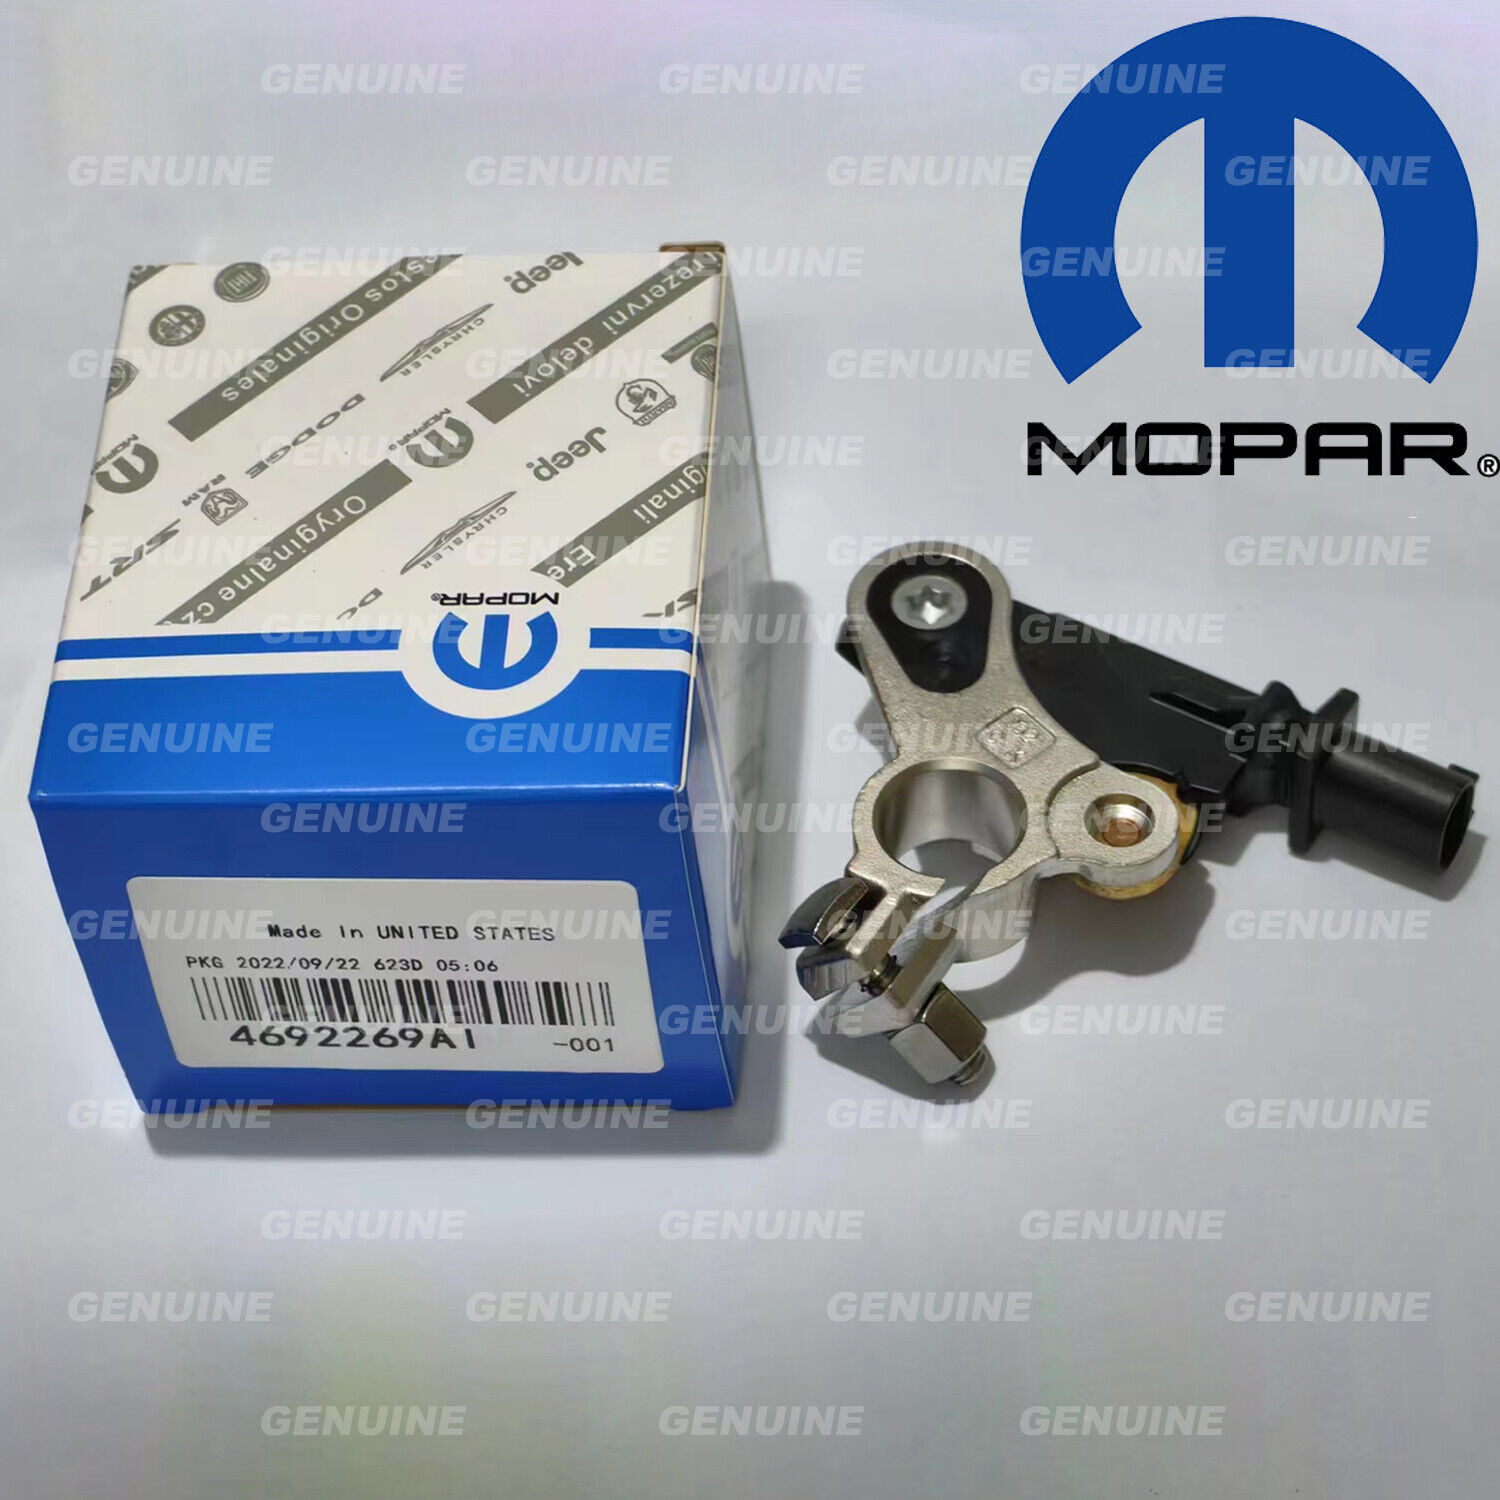 Genuine Mopar 4692269AI Battery Temp Sensor For 2011-20 JEEP DODGE CHRYSLER RAM